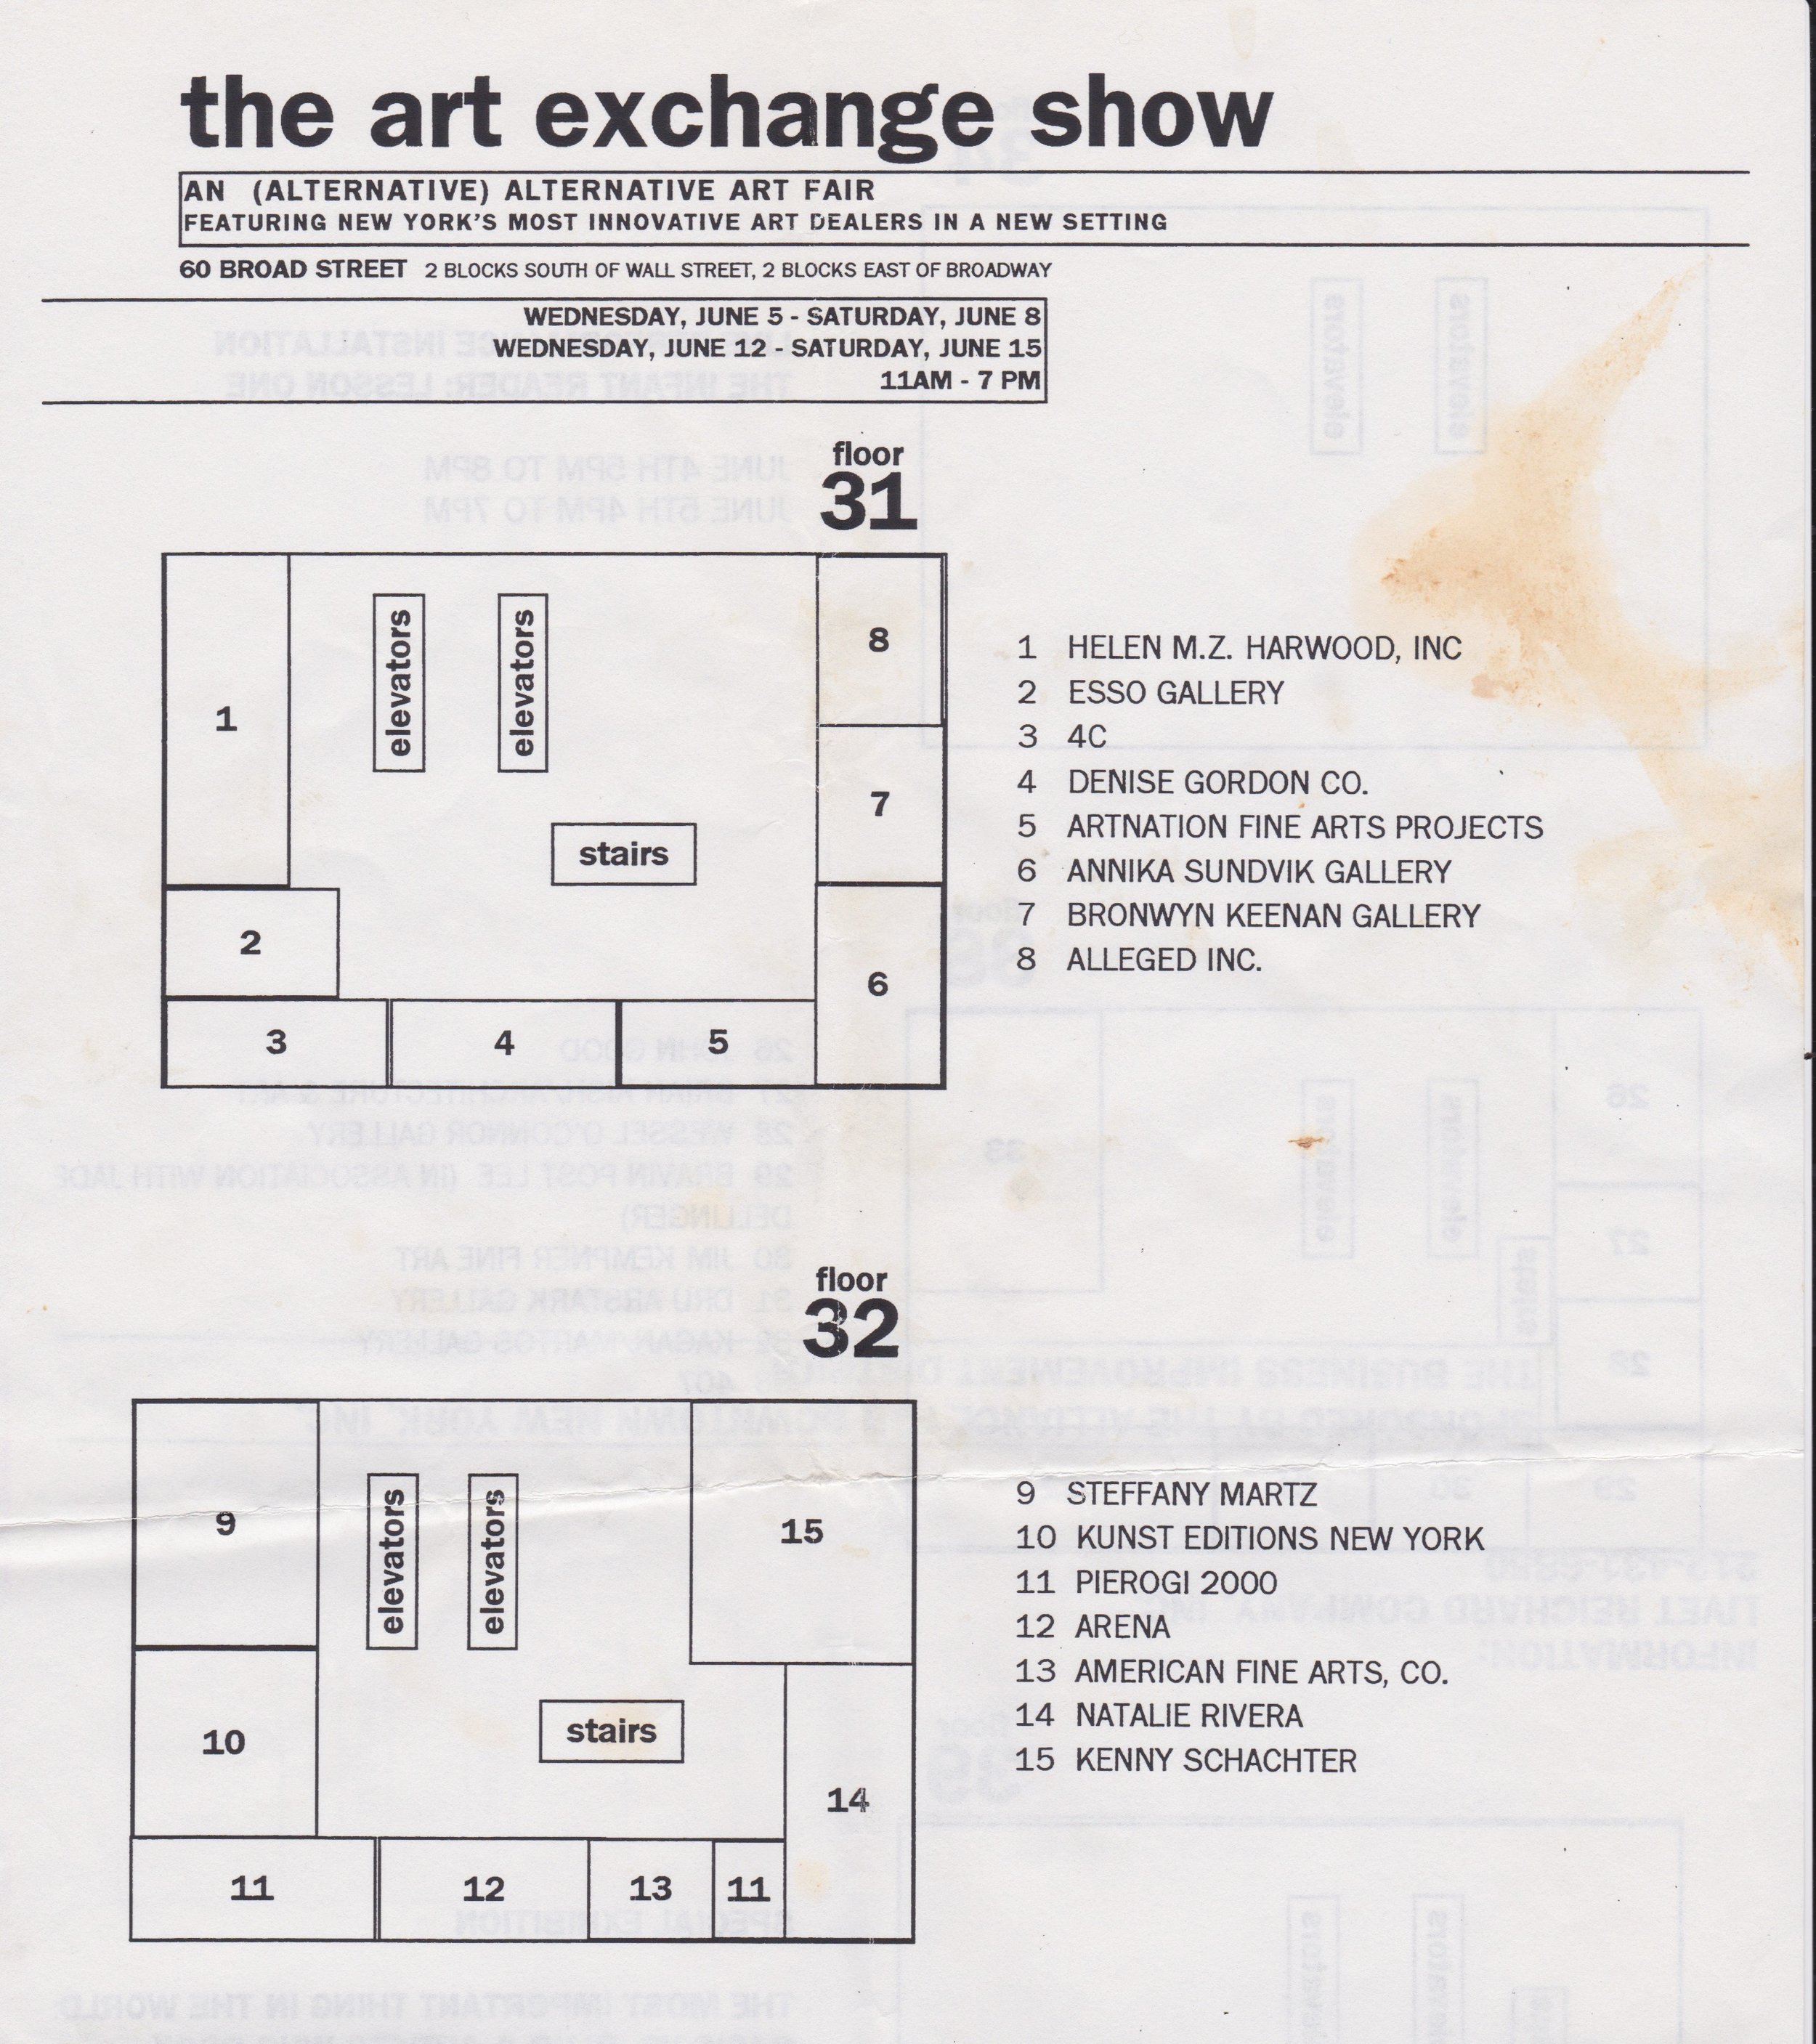 The Art Exchange Show 1996